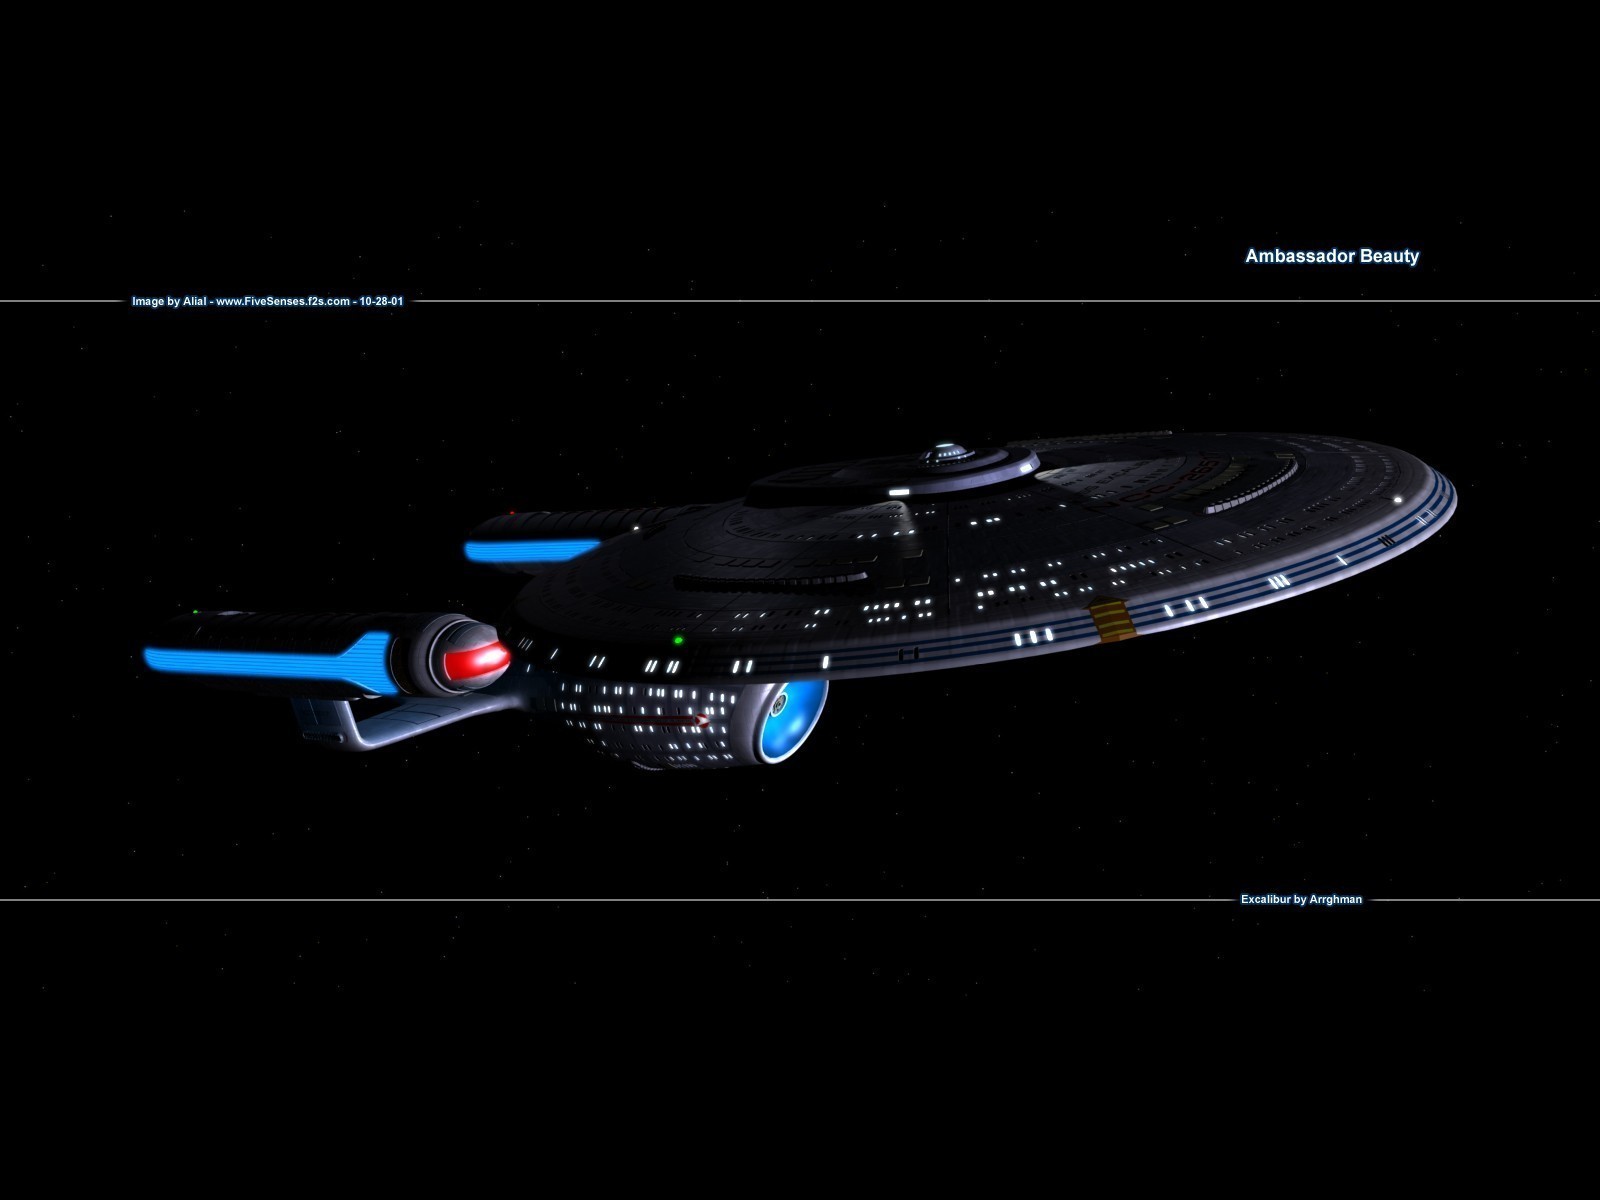 Star Trek Wallpaper